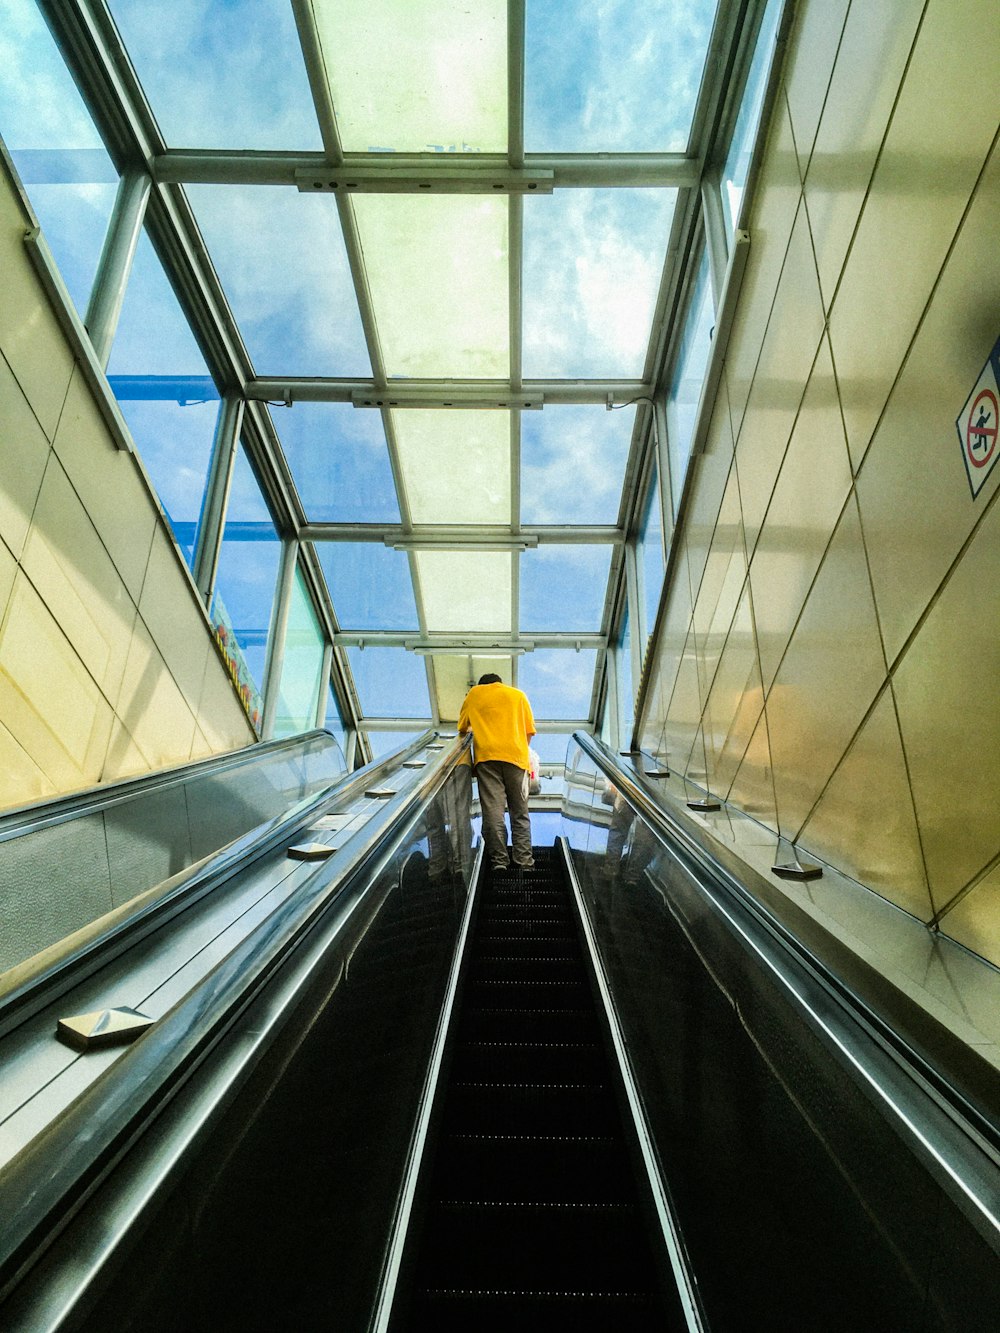 person in yellow jacket walking on escalator